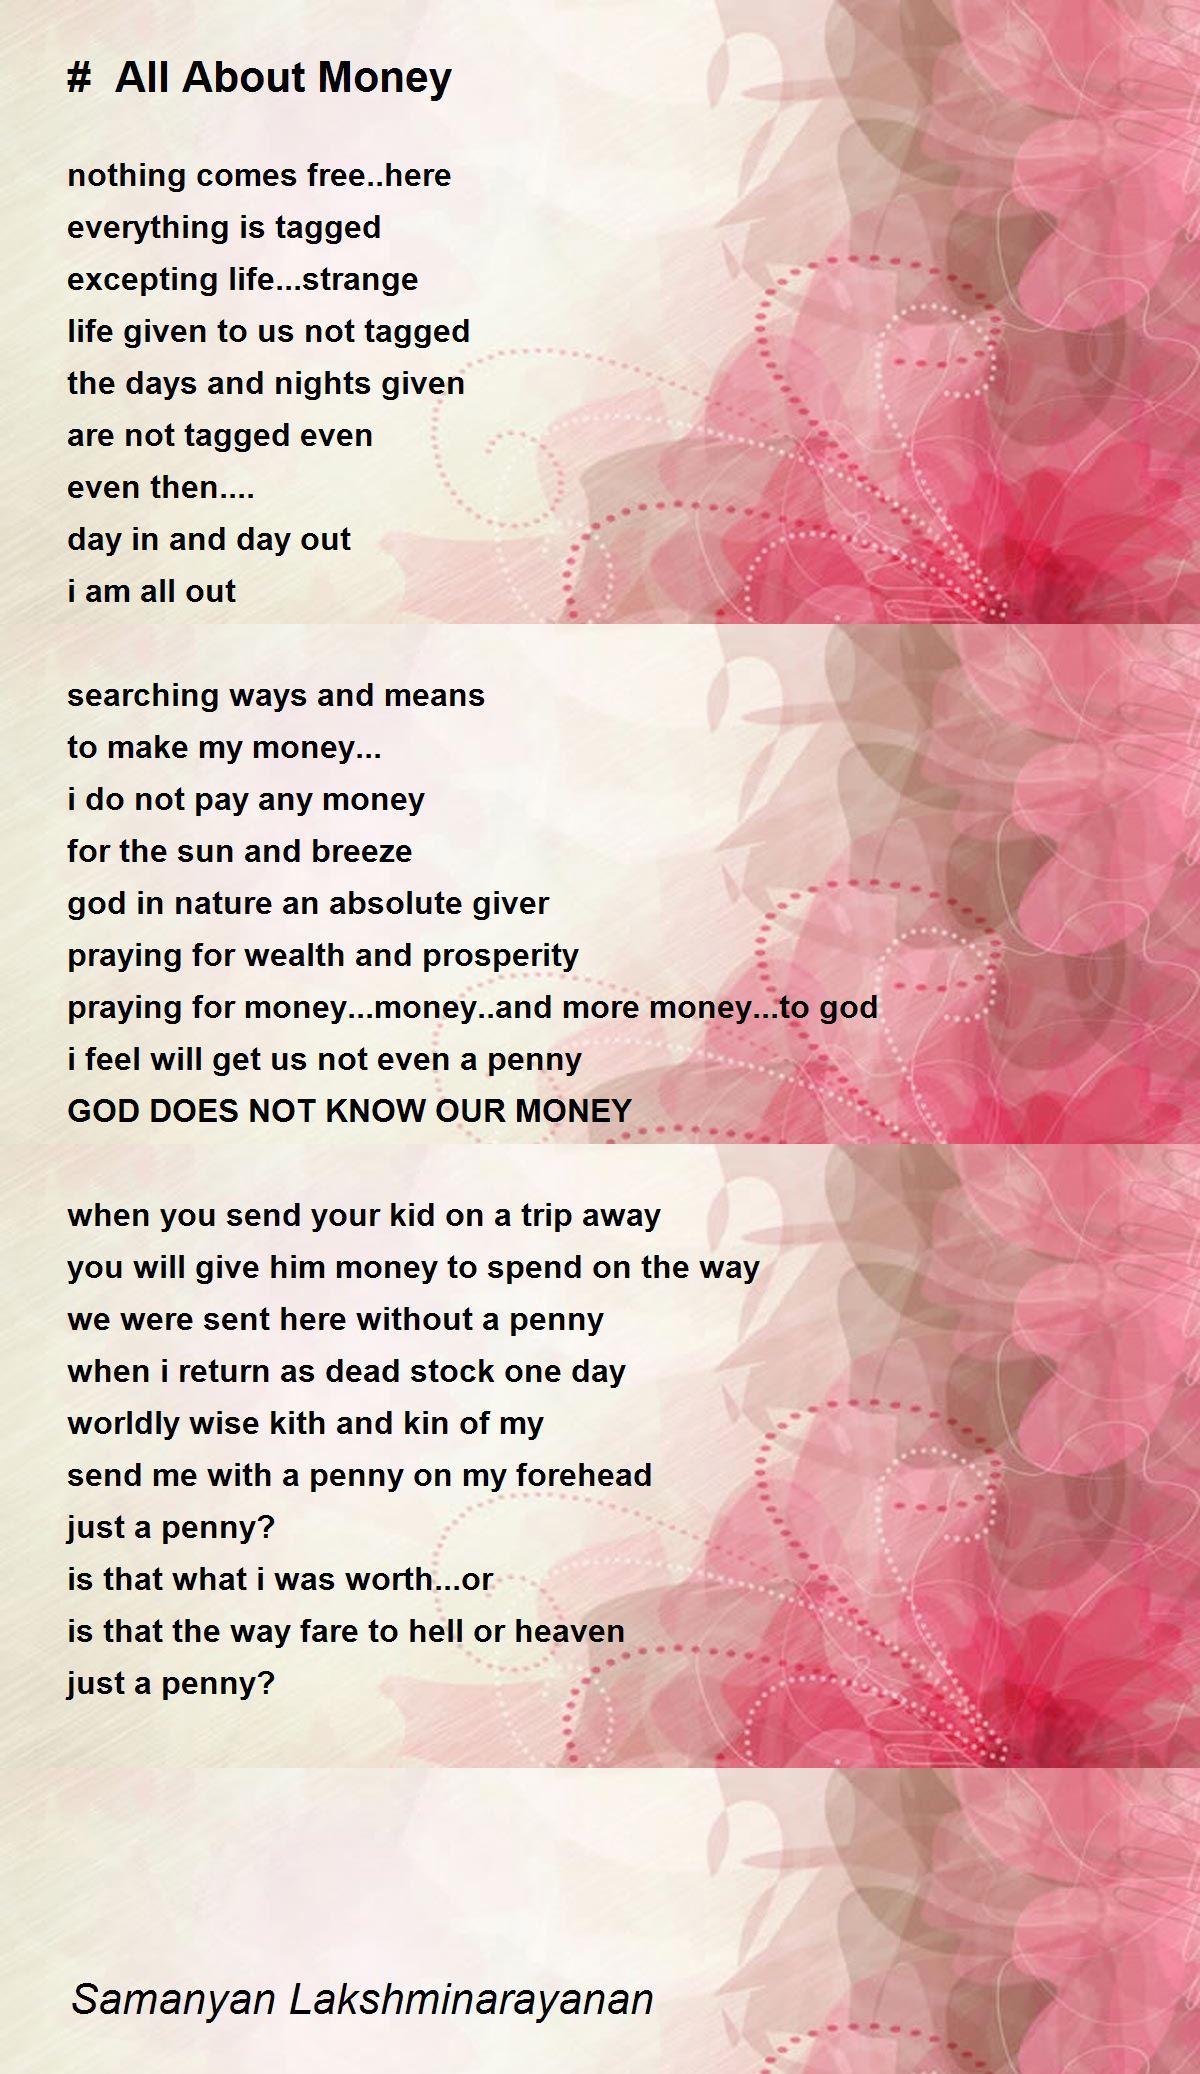 # All About Money Poem by Samanyan Lakshminarayanan - Poem Hunter